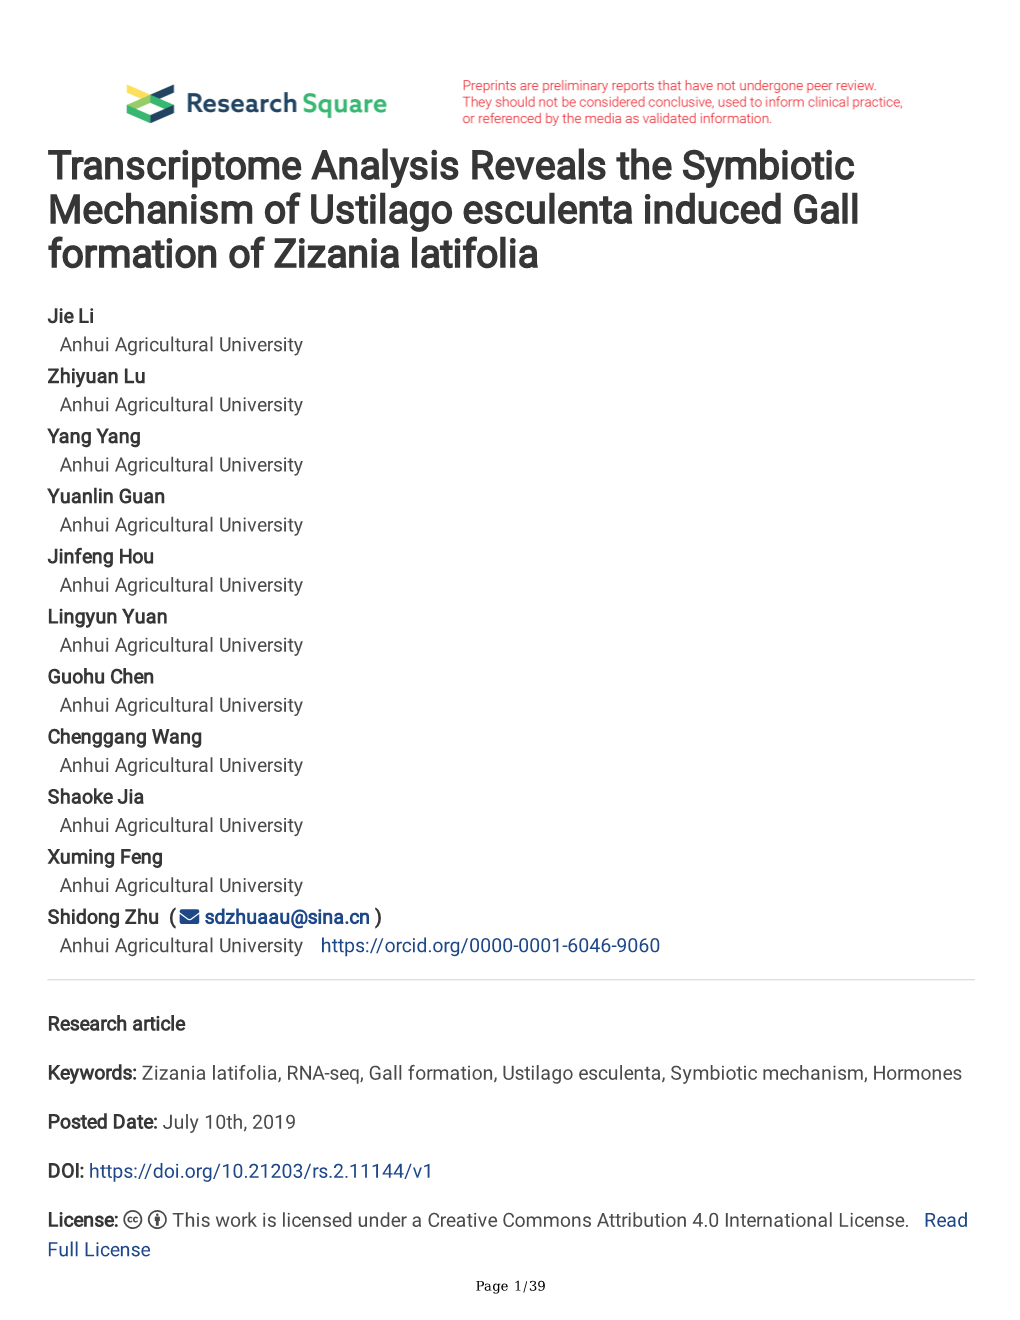 Transcriptome Analysis Reveals the Symbiotic Mechanism of Ustilago Esculenta Induced Gall Formation of Zizania Latifolia